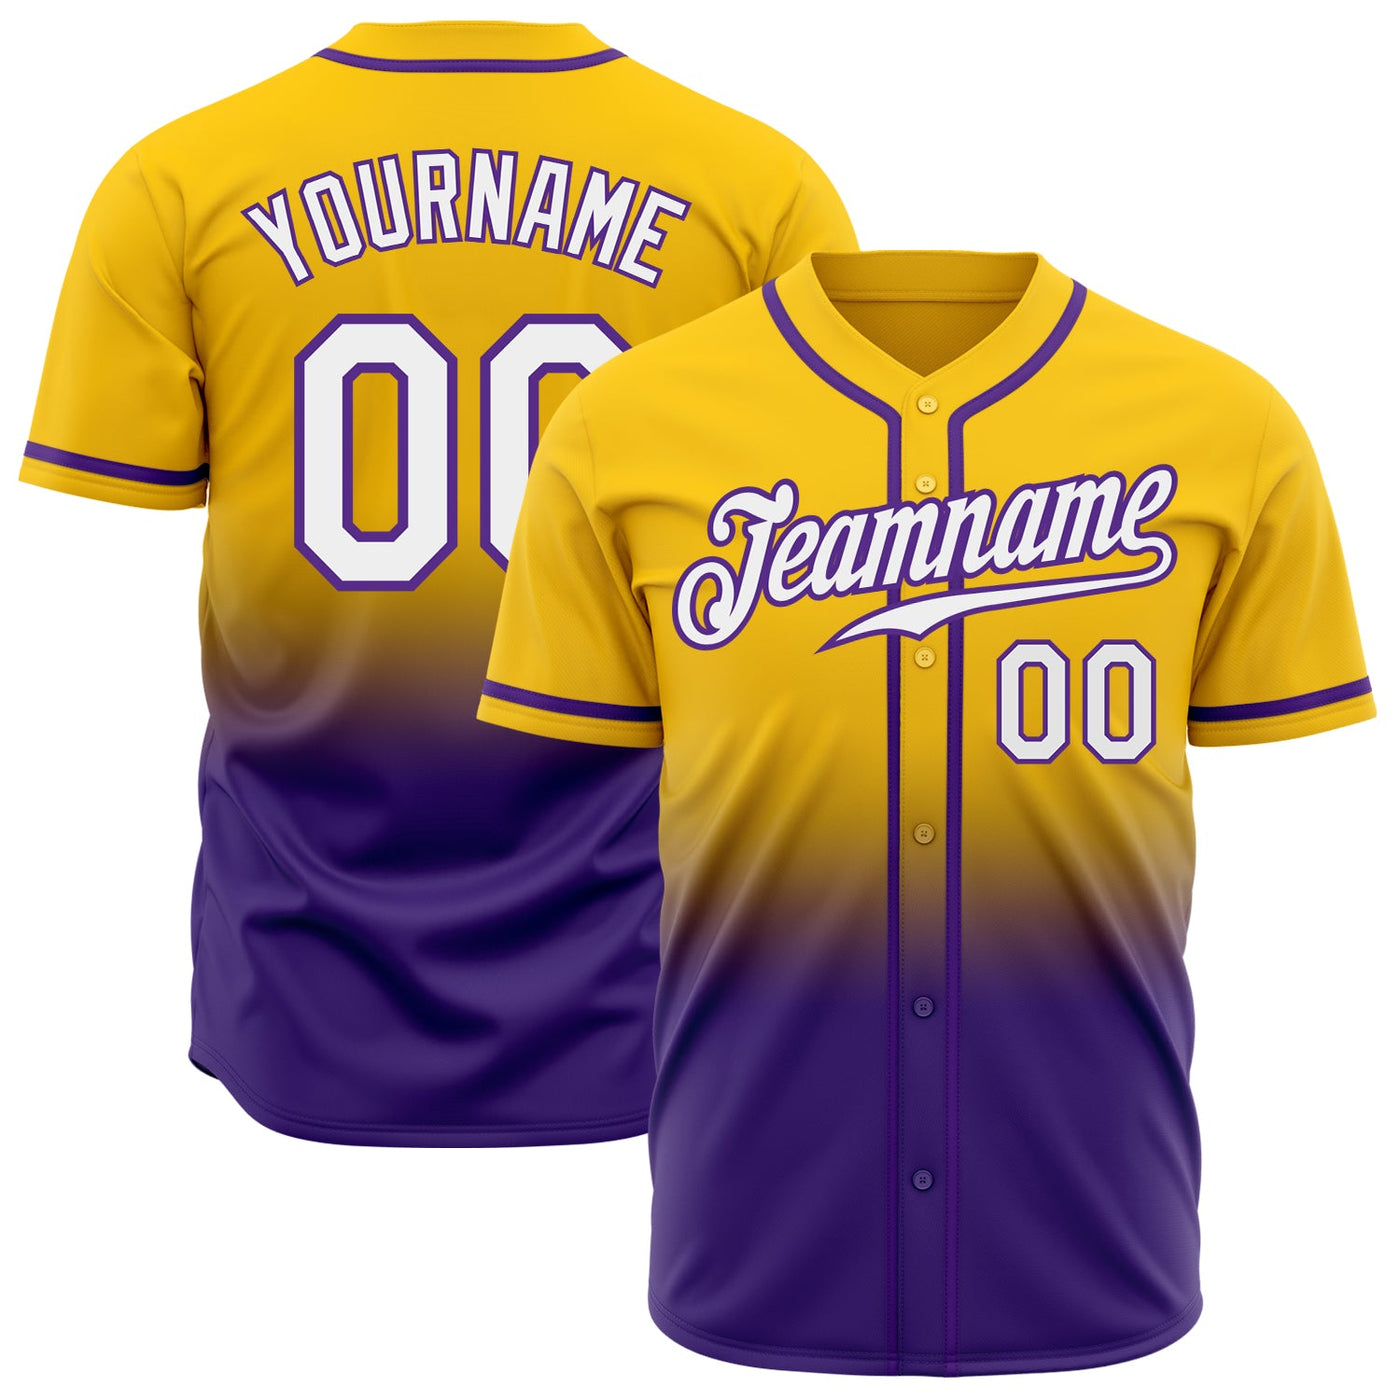 Custom Gold White-Purple Authentic Fade Fashion Baseball Jersey